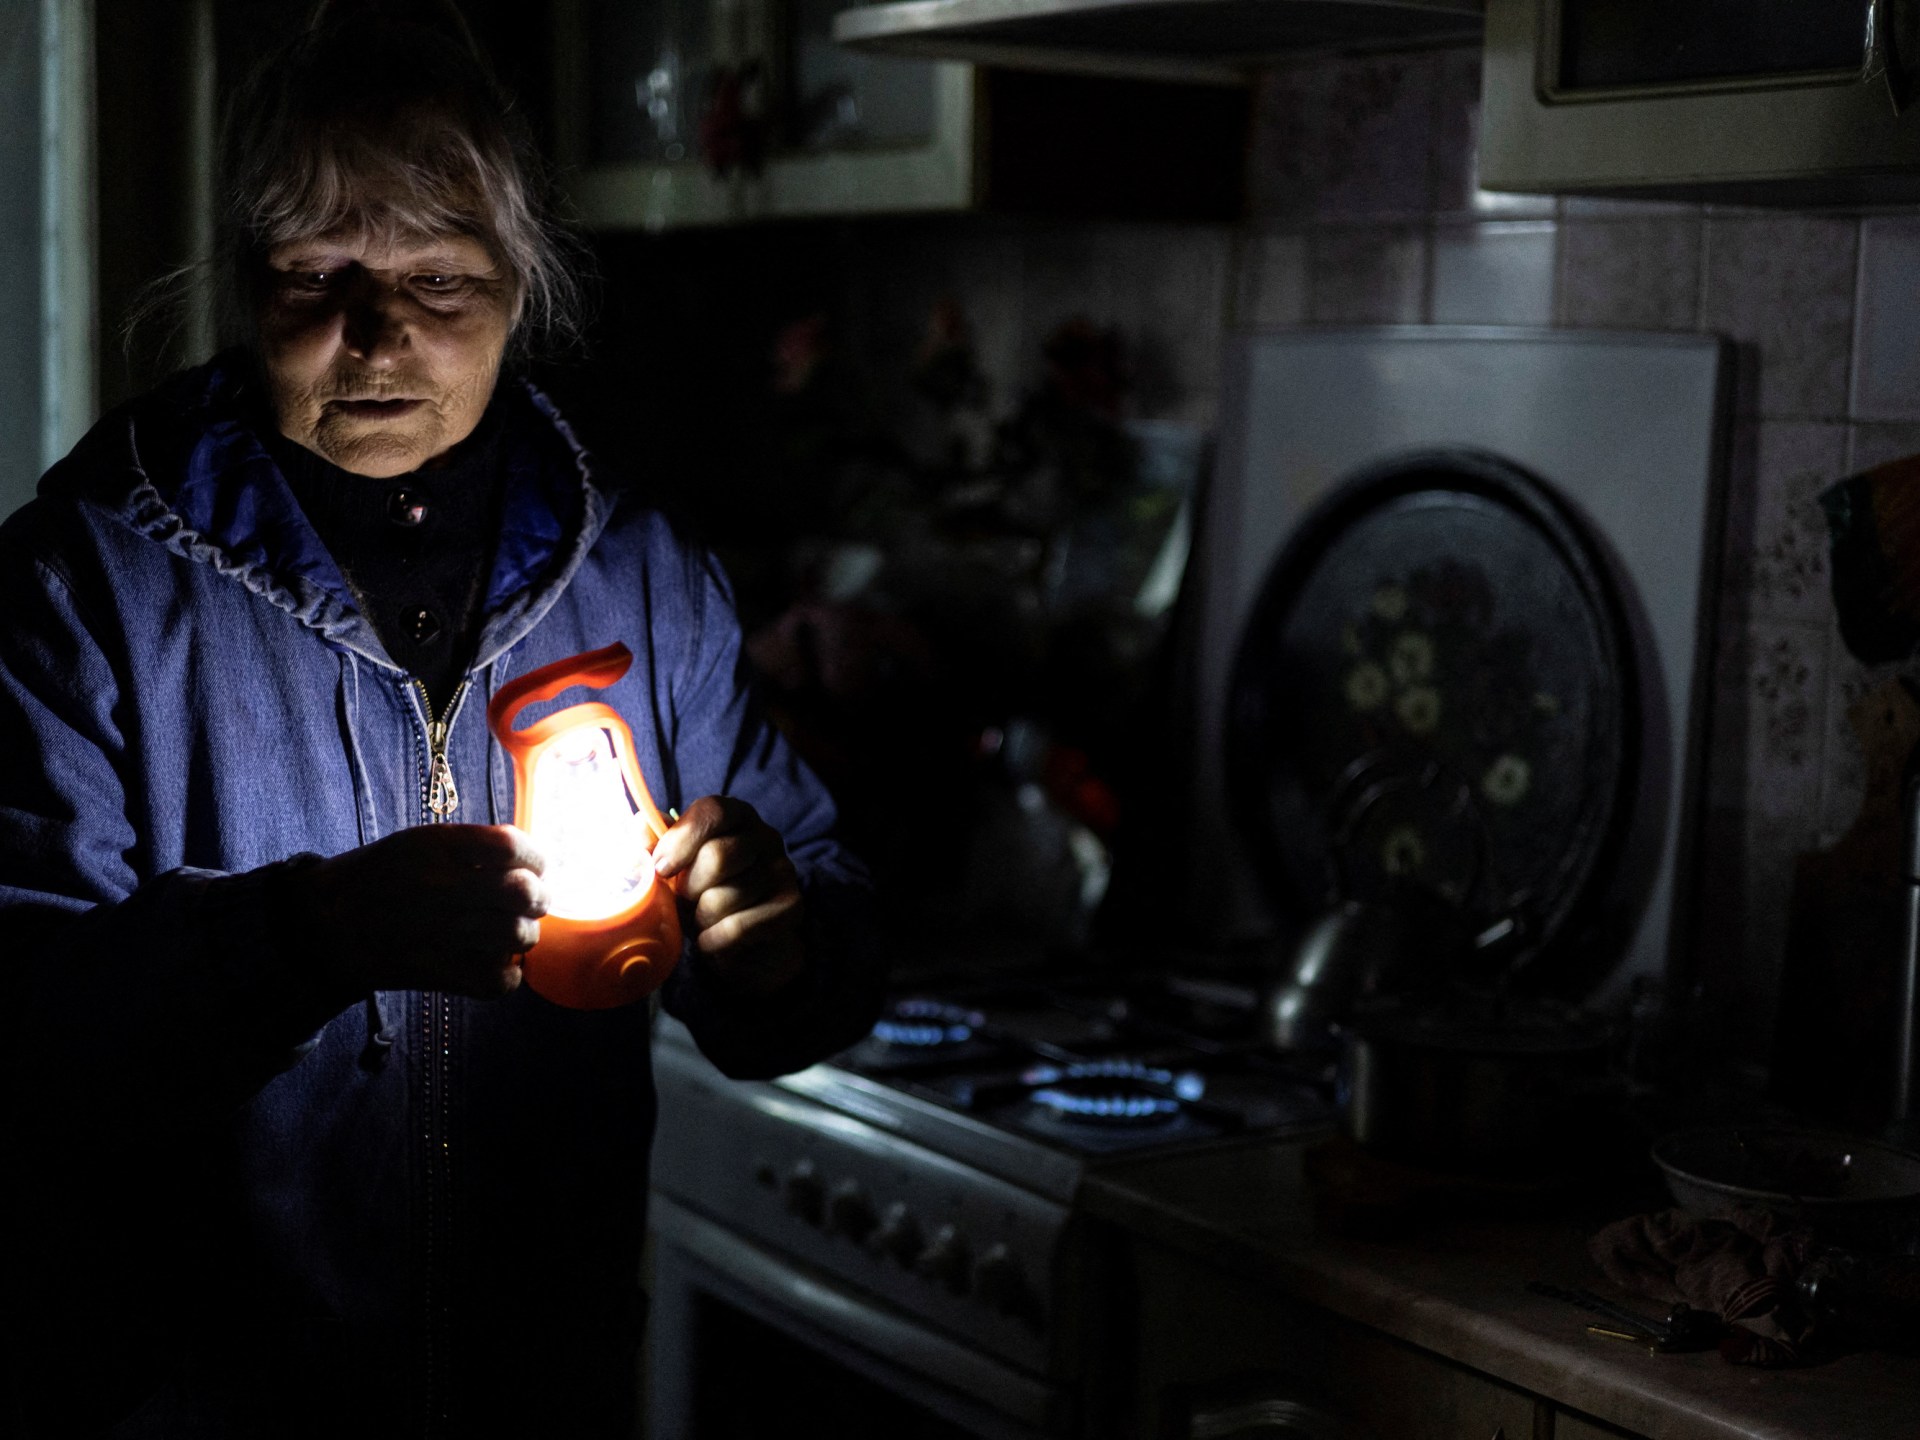 Ukrainians face life-threatening winter, as temperatures dip: WHO